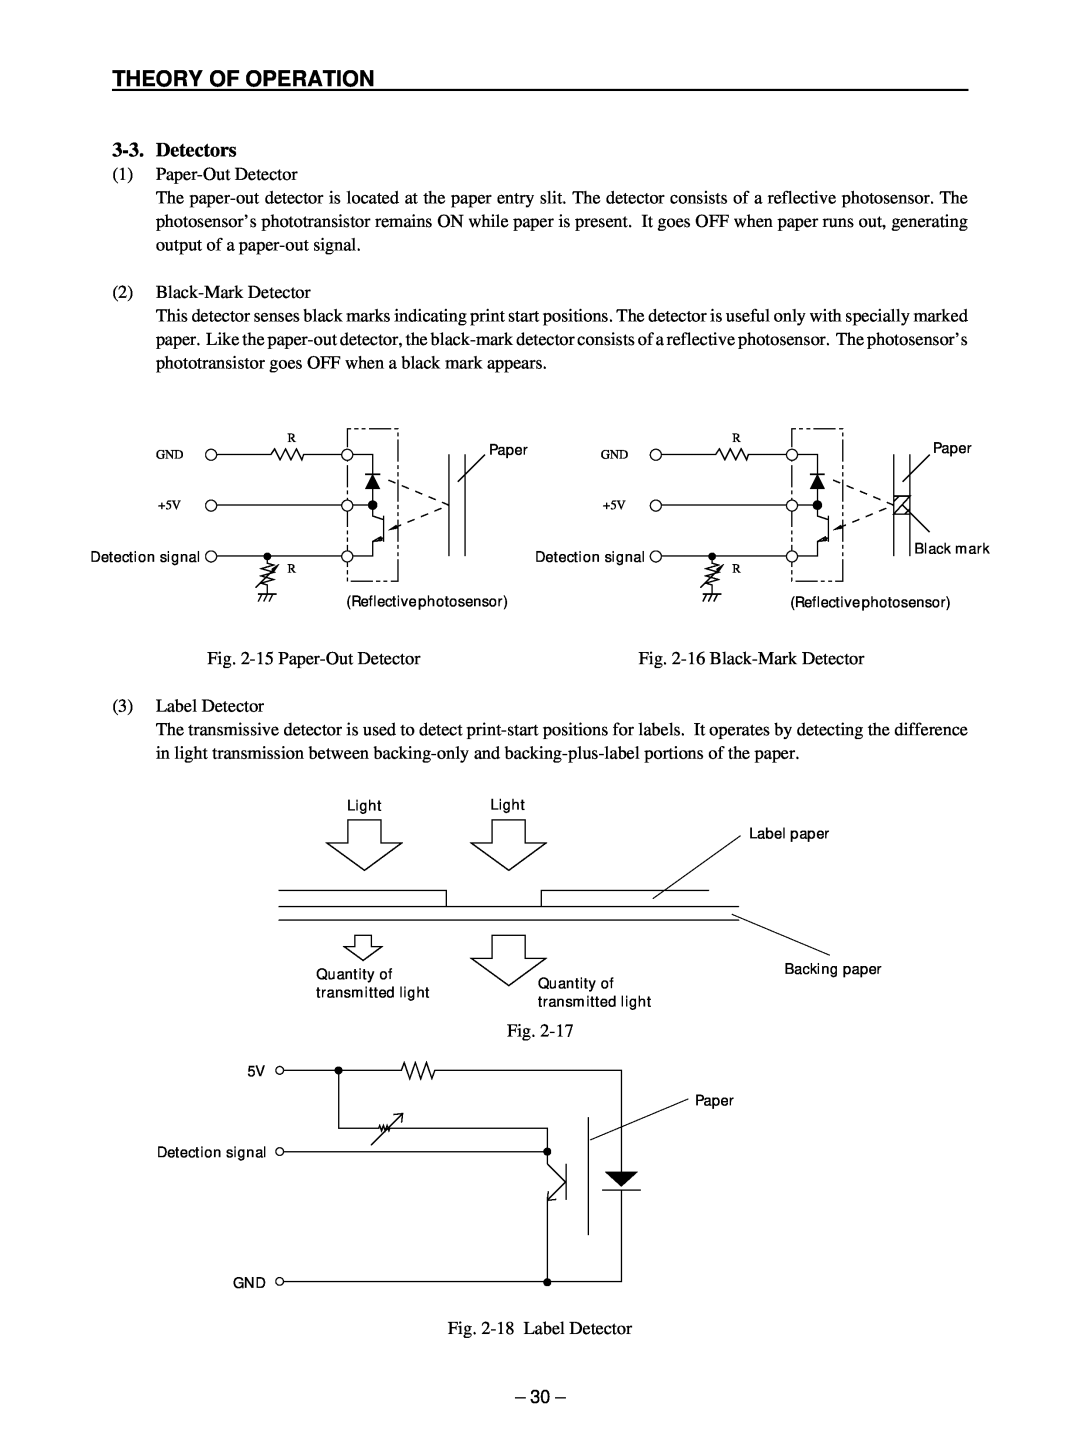 Star Micronics TSP400 technical manual Detectors, Theory Of Operation 